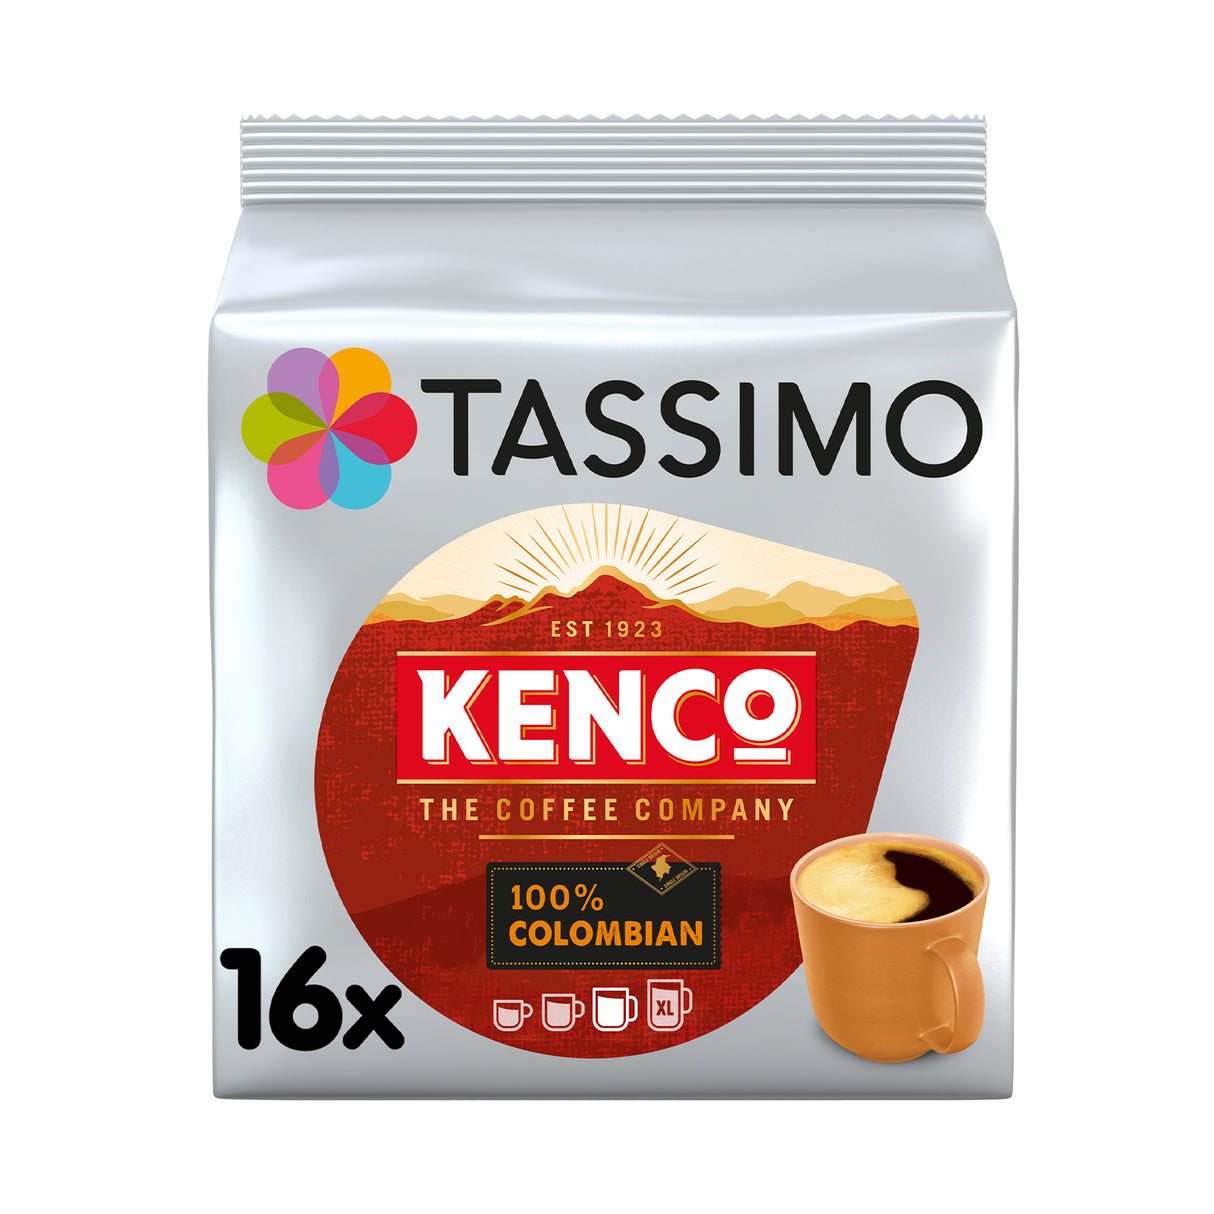 Tassimo Kenco Pure Colombian Coffee Pods Case